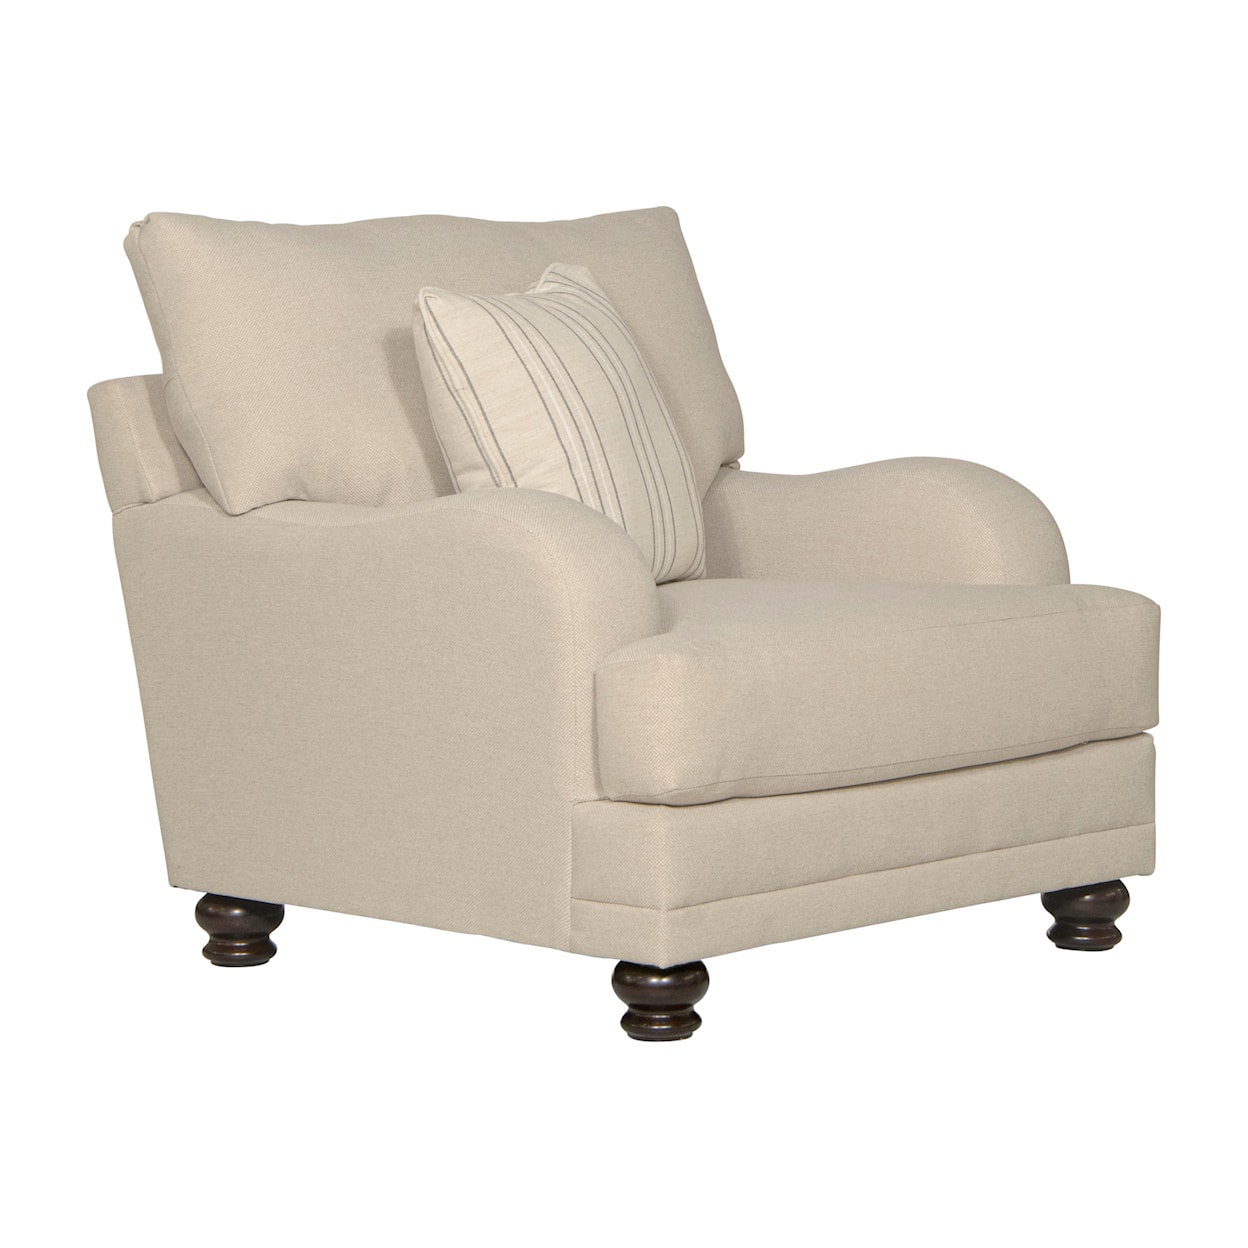 Jackson Furniture Jonesport Chair